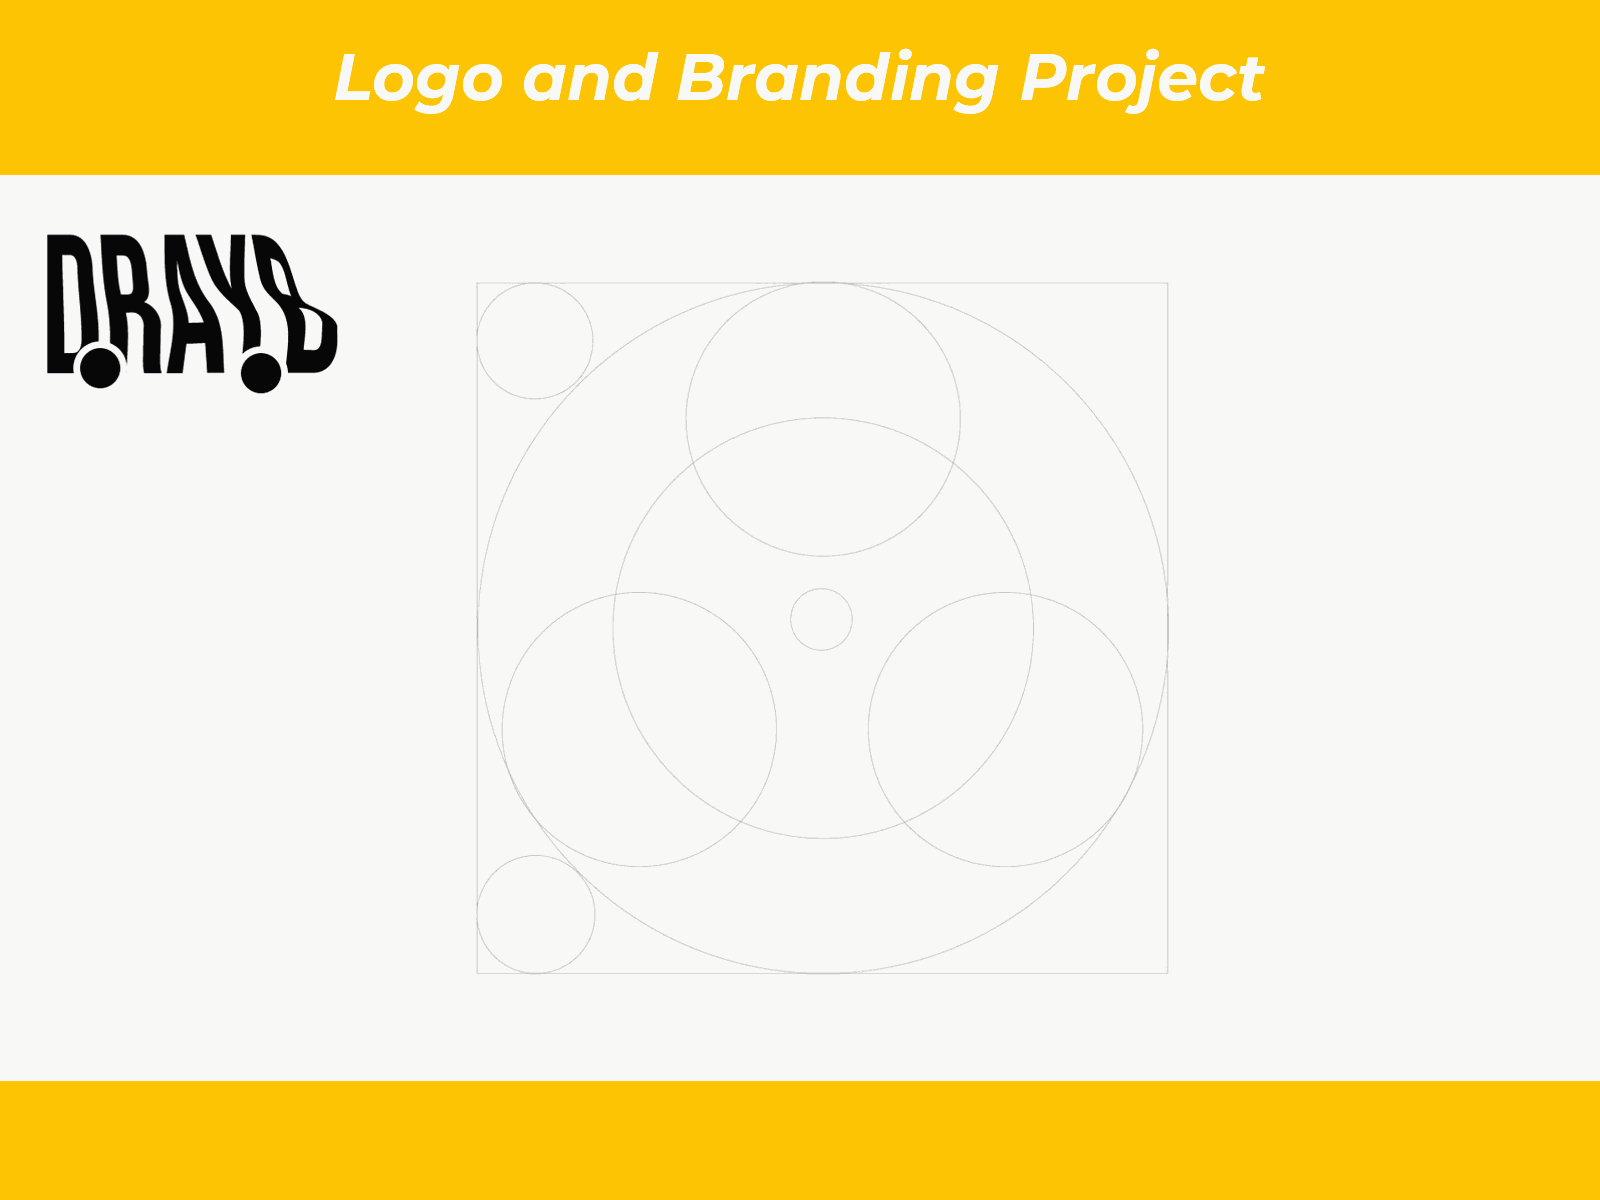 QoreDrayb Logo and Branding Project